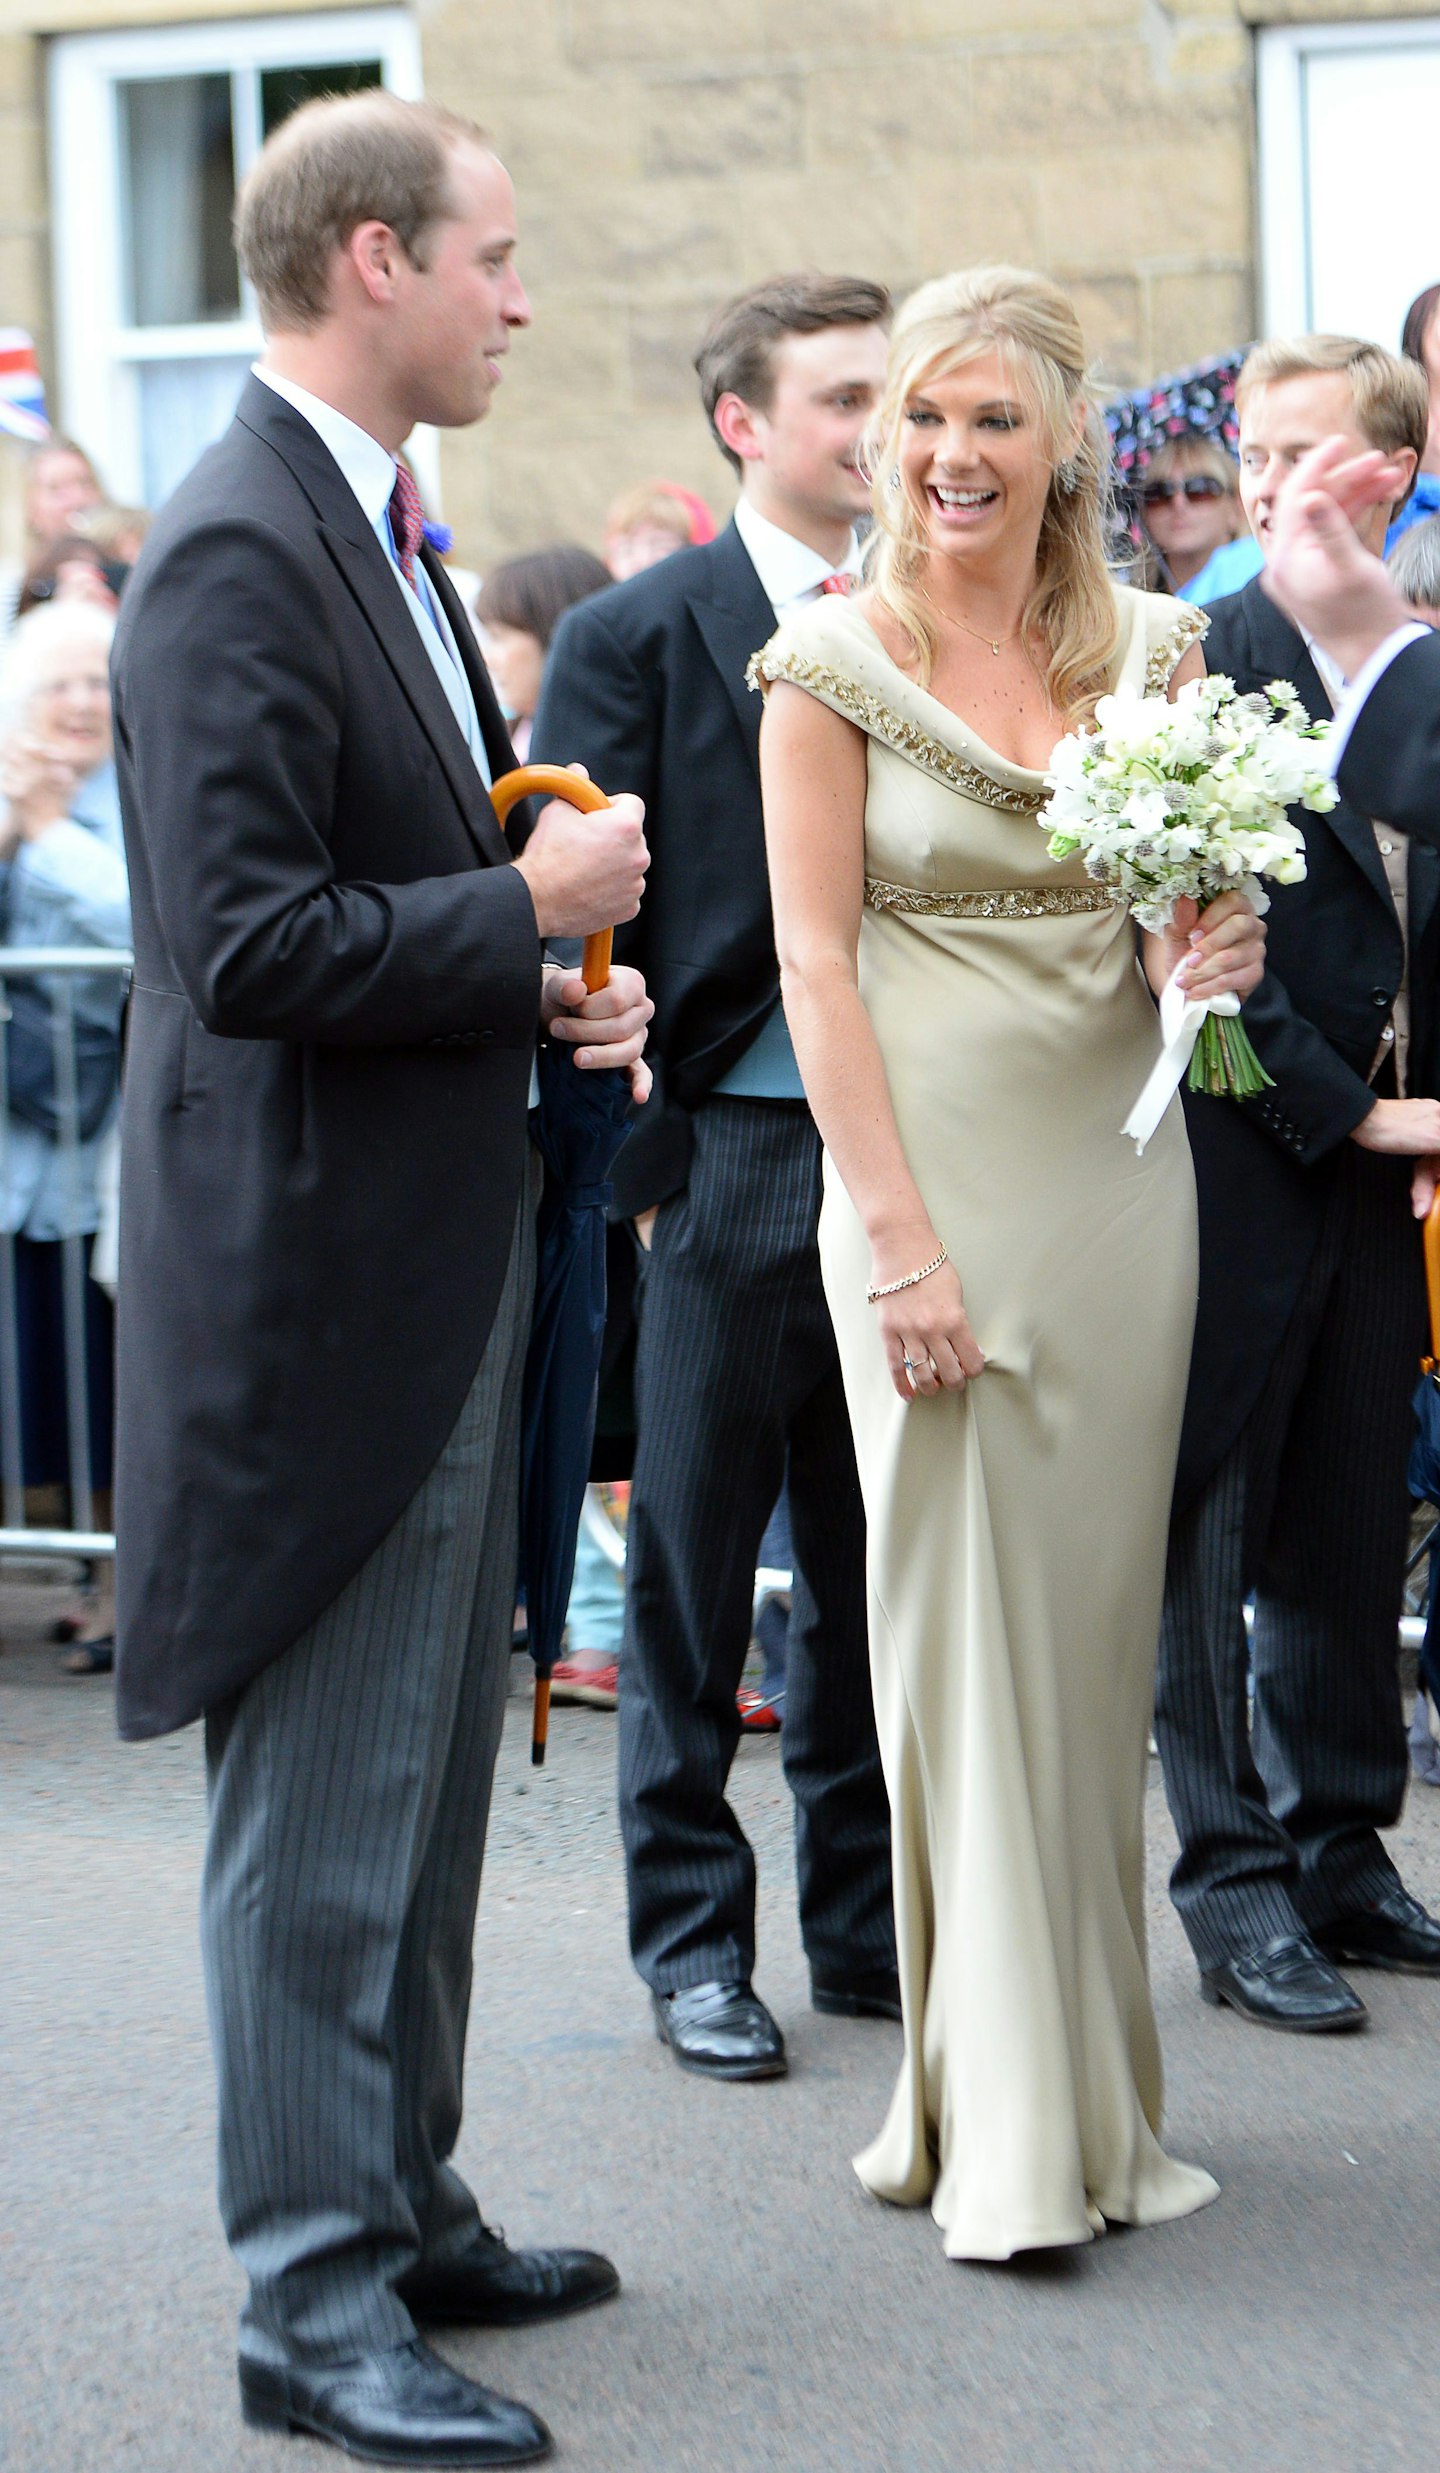 Grazia: Royal Wedding Bridesmaids Lady Melissa Percy and Thomas van Straubenzee